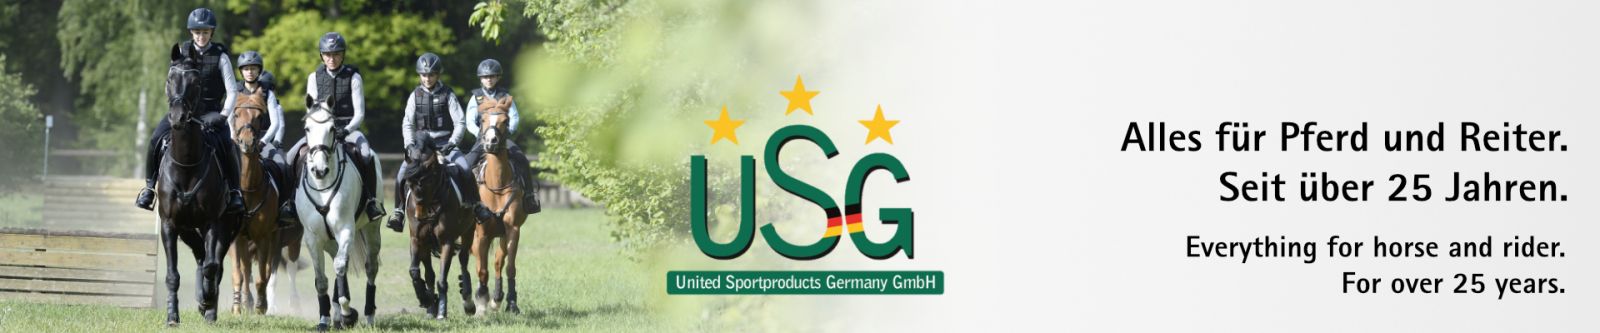 Karriere - USG - United Sportproducts Germany GmbH